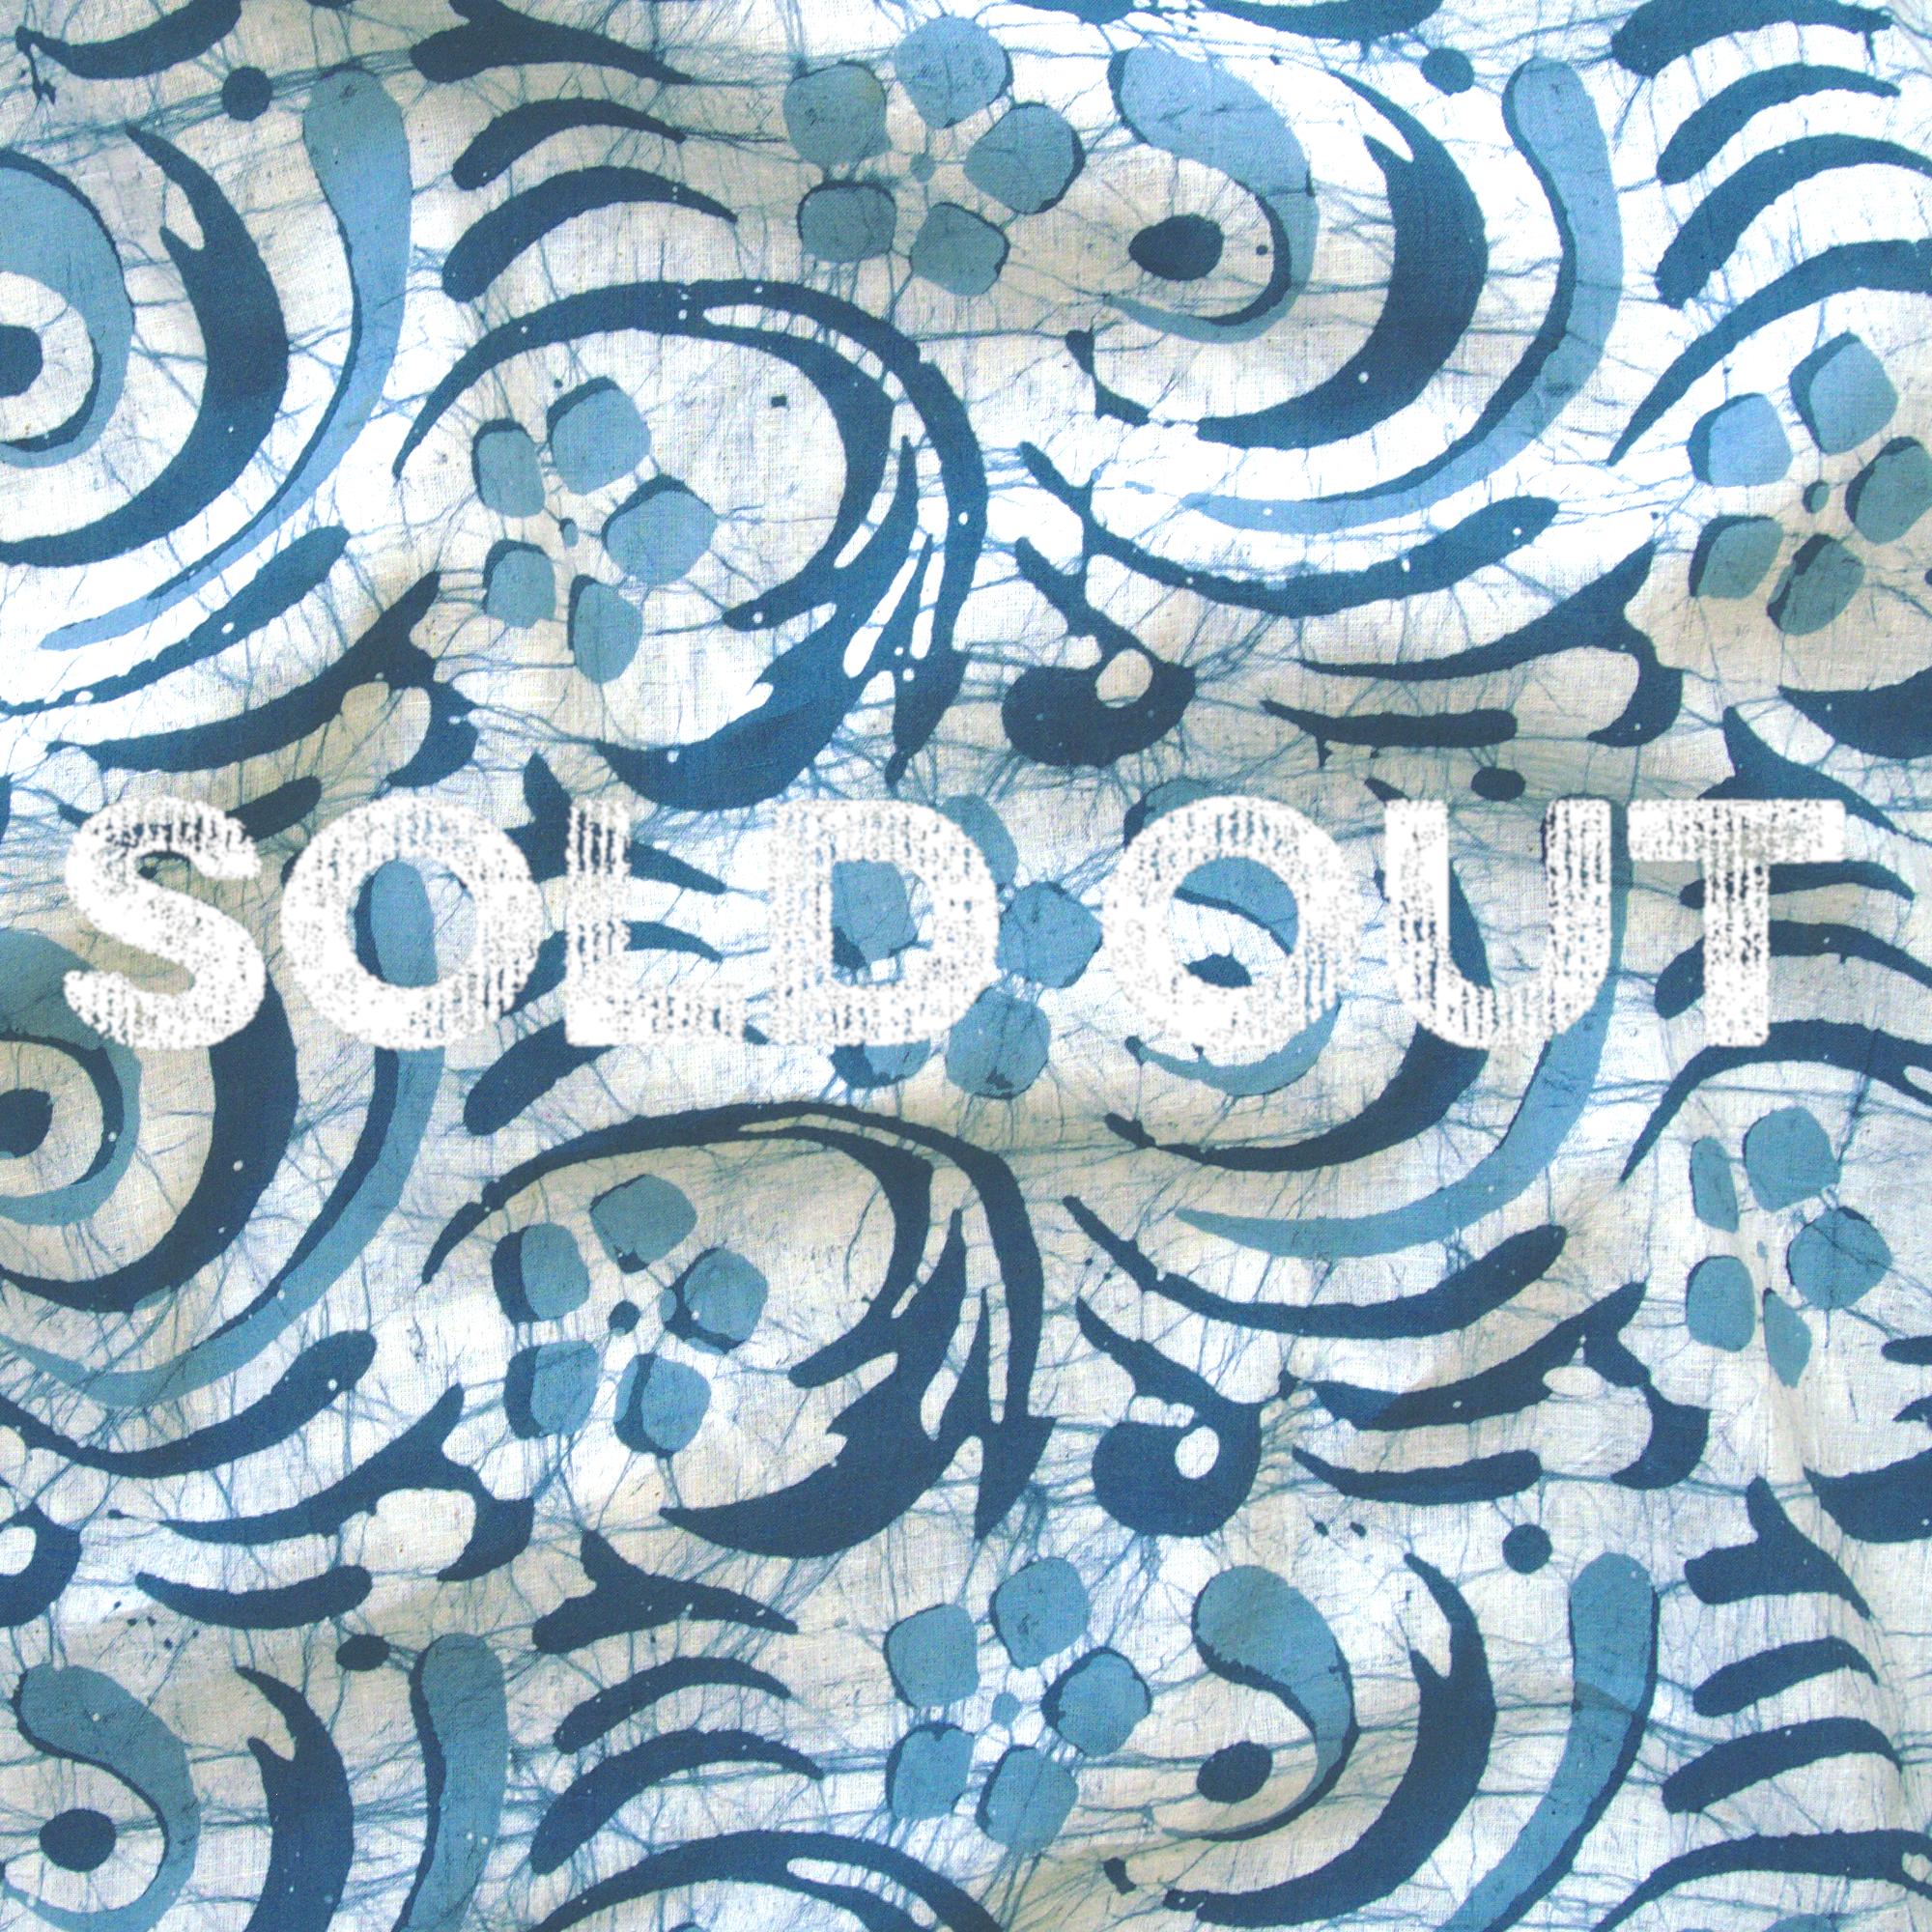 1 - SHA14 - 100% Block-Printed Batik Cotton Fabric From India - Batik - Blue Swirls - Contrast